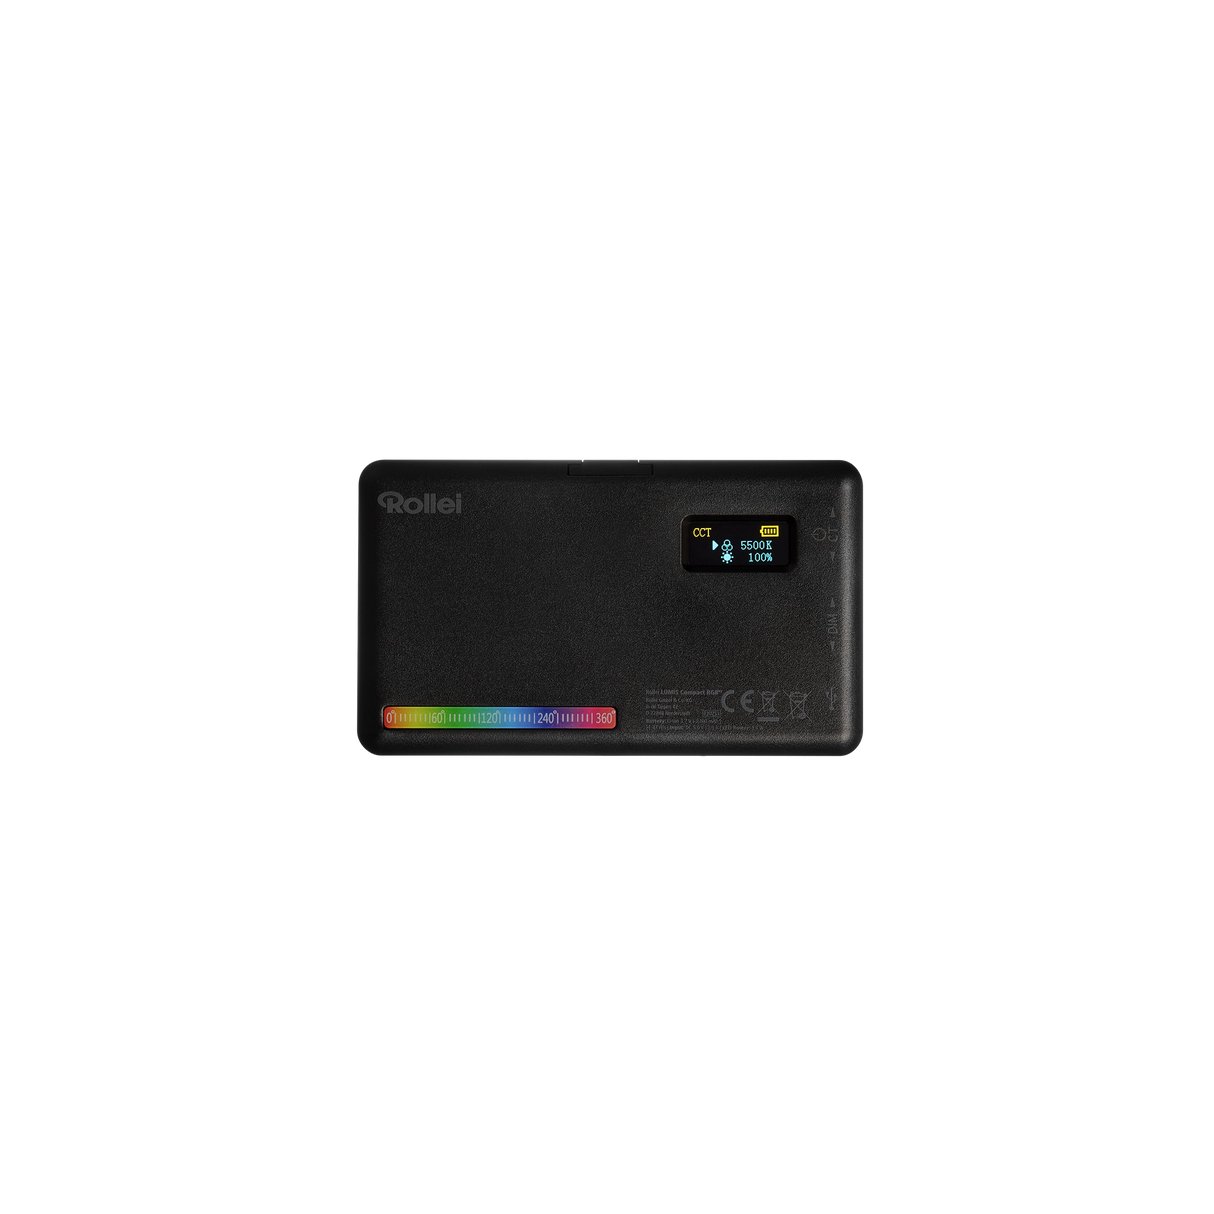 LUMIS Compact RGB - Kleines LED-Licht